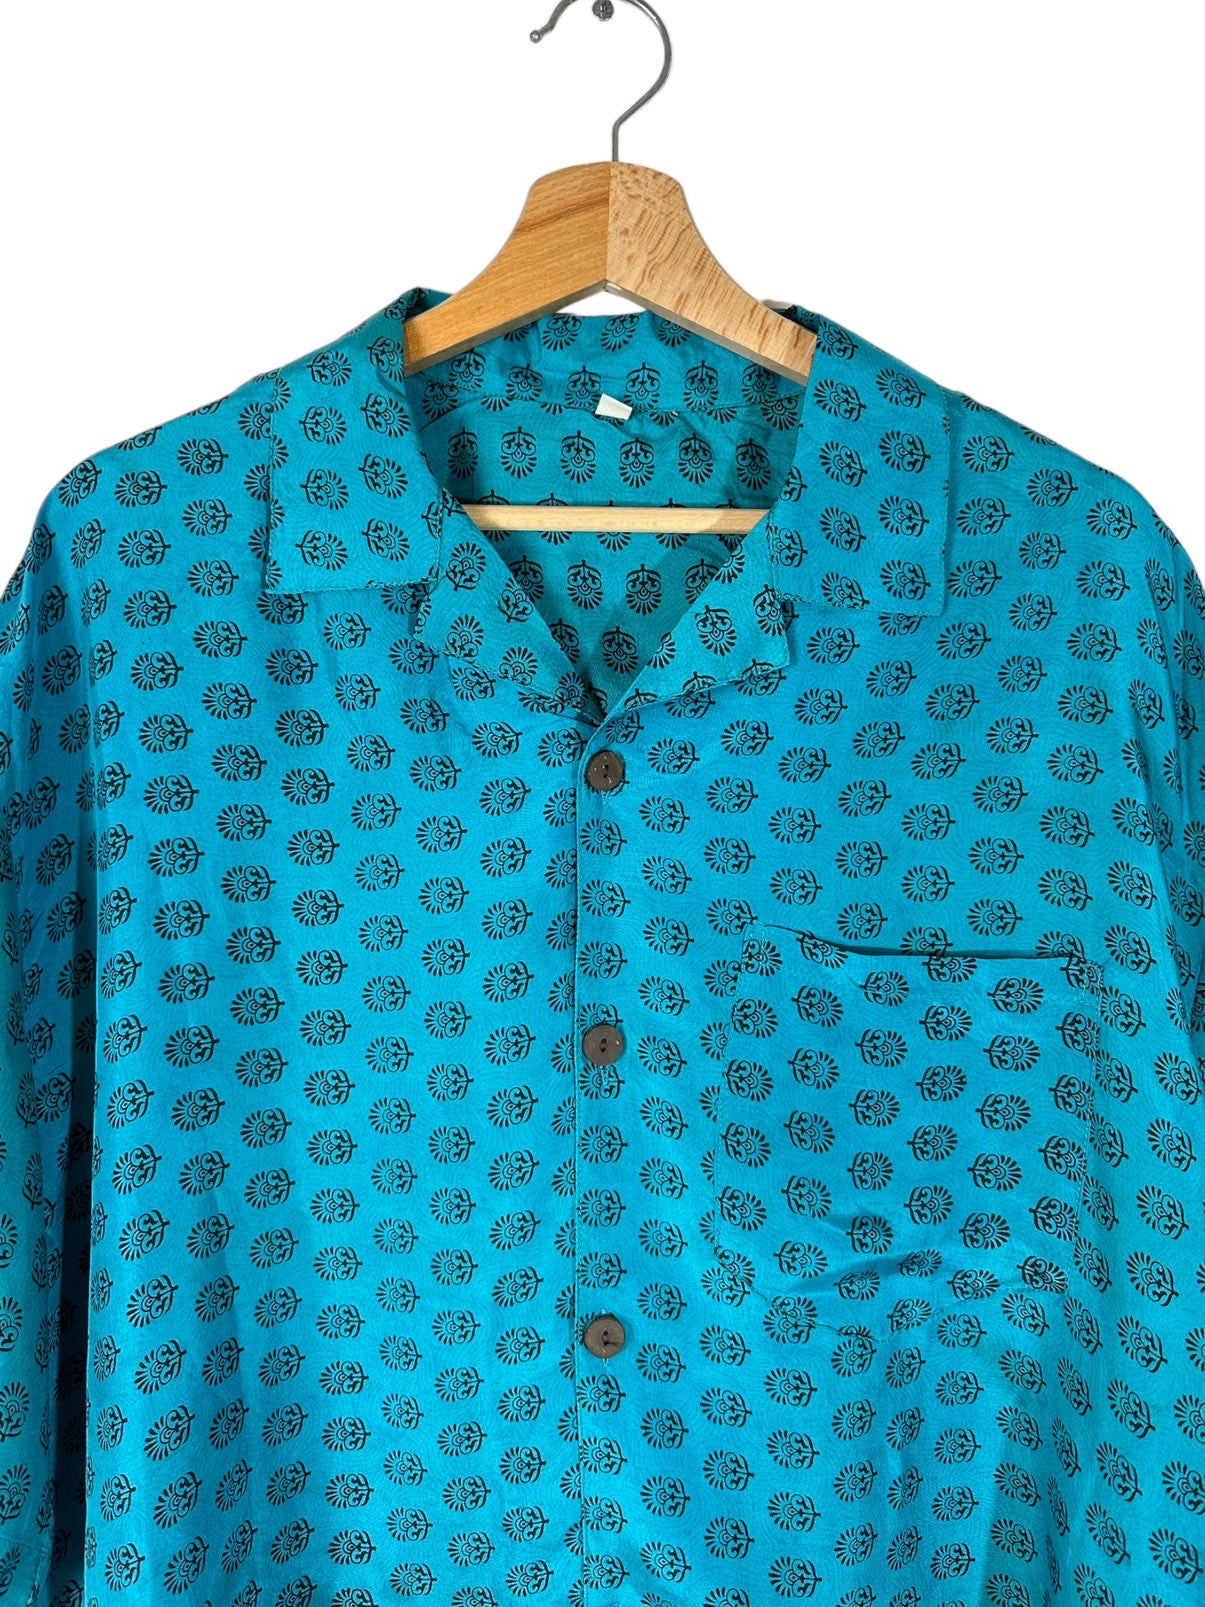 Vintage silk printed shirt (XL)